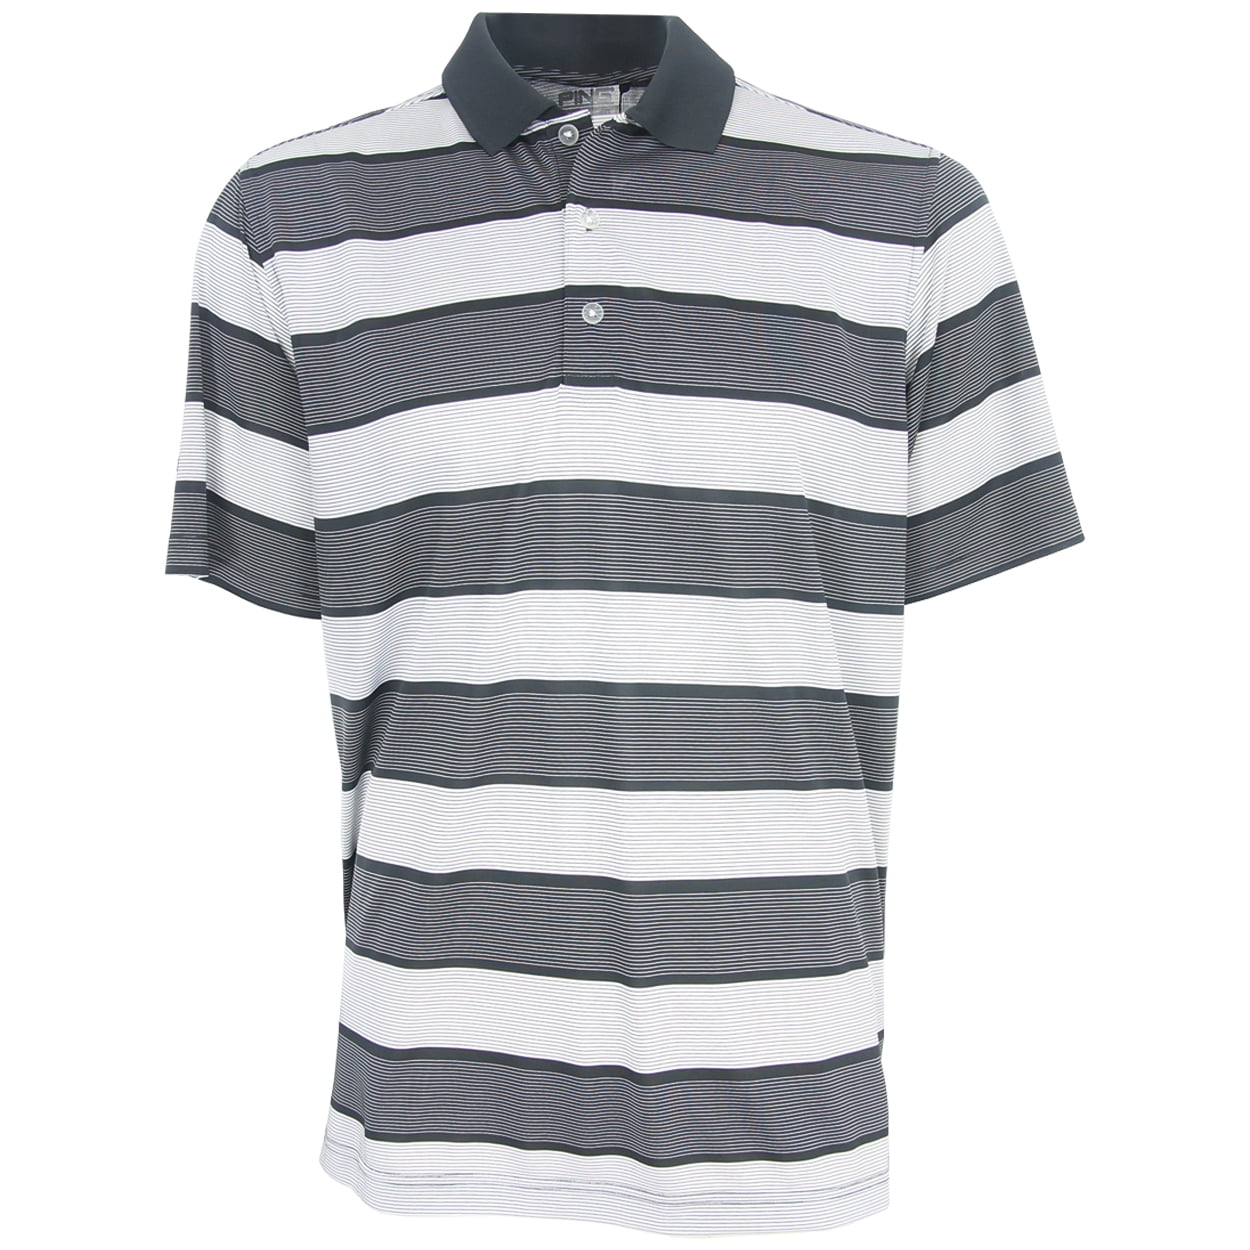 PING Golf Men's Dance Floor Sensorcool Striped Polo Shirt, Brand NEW ...